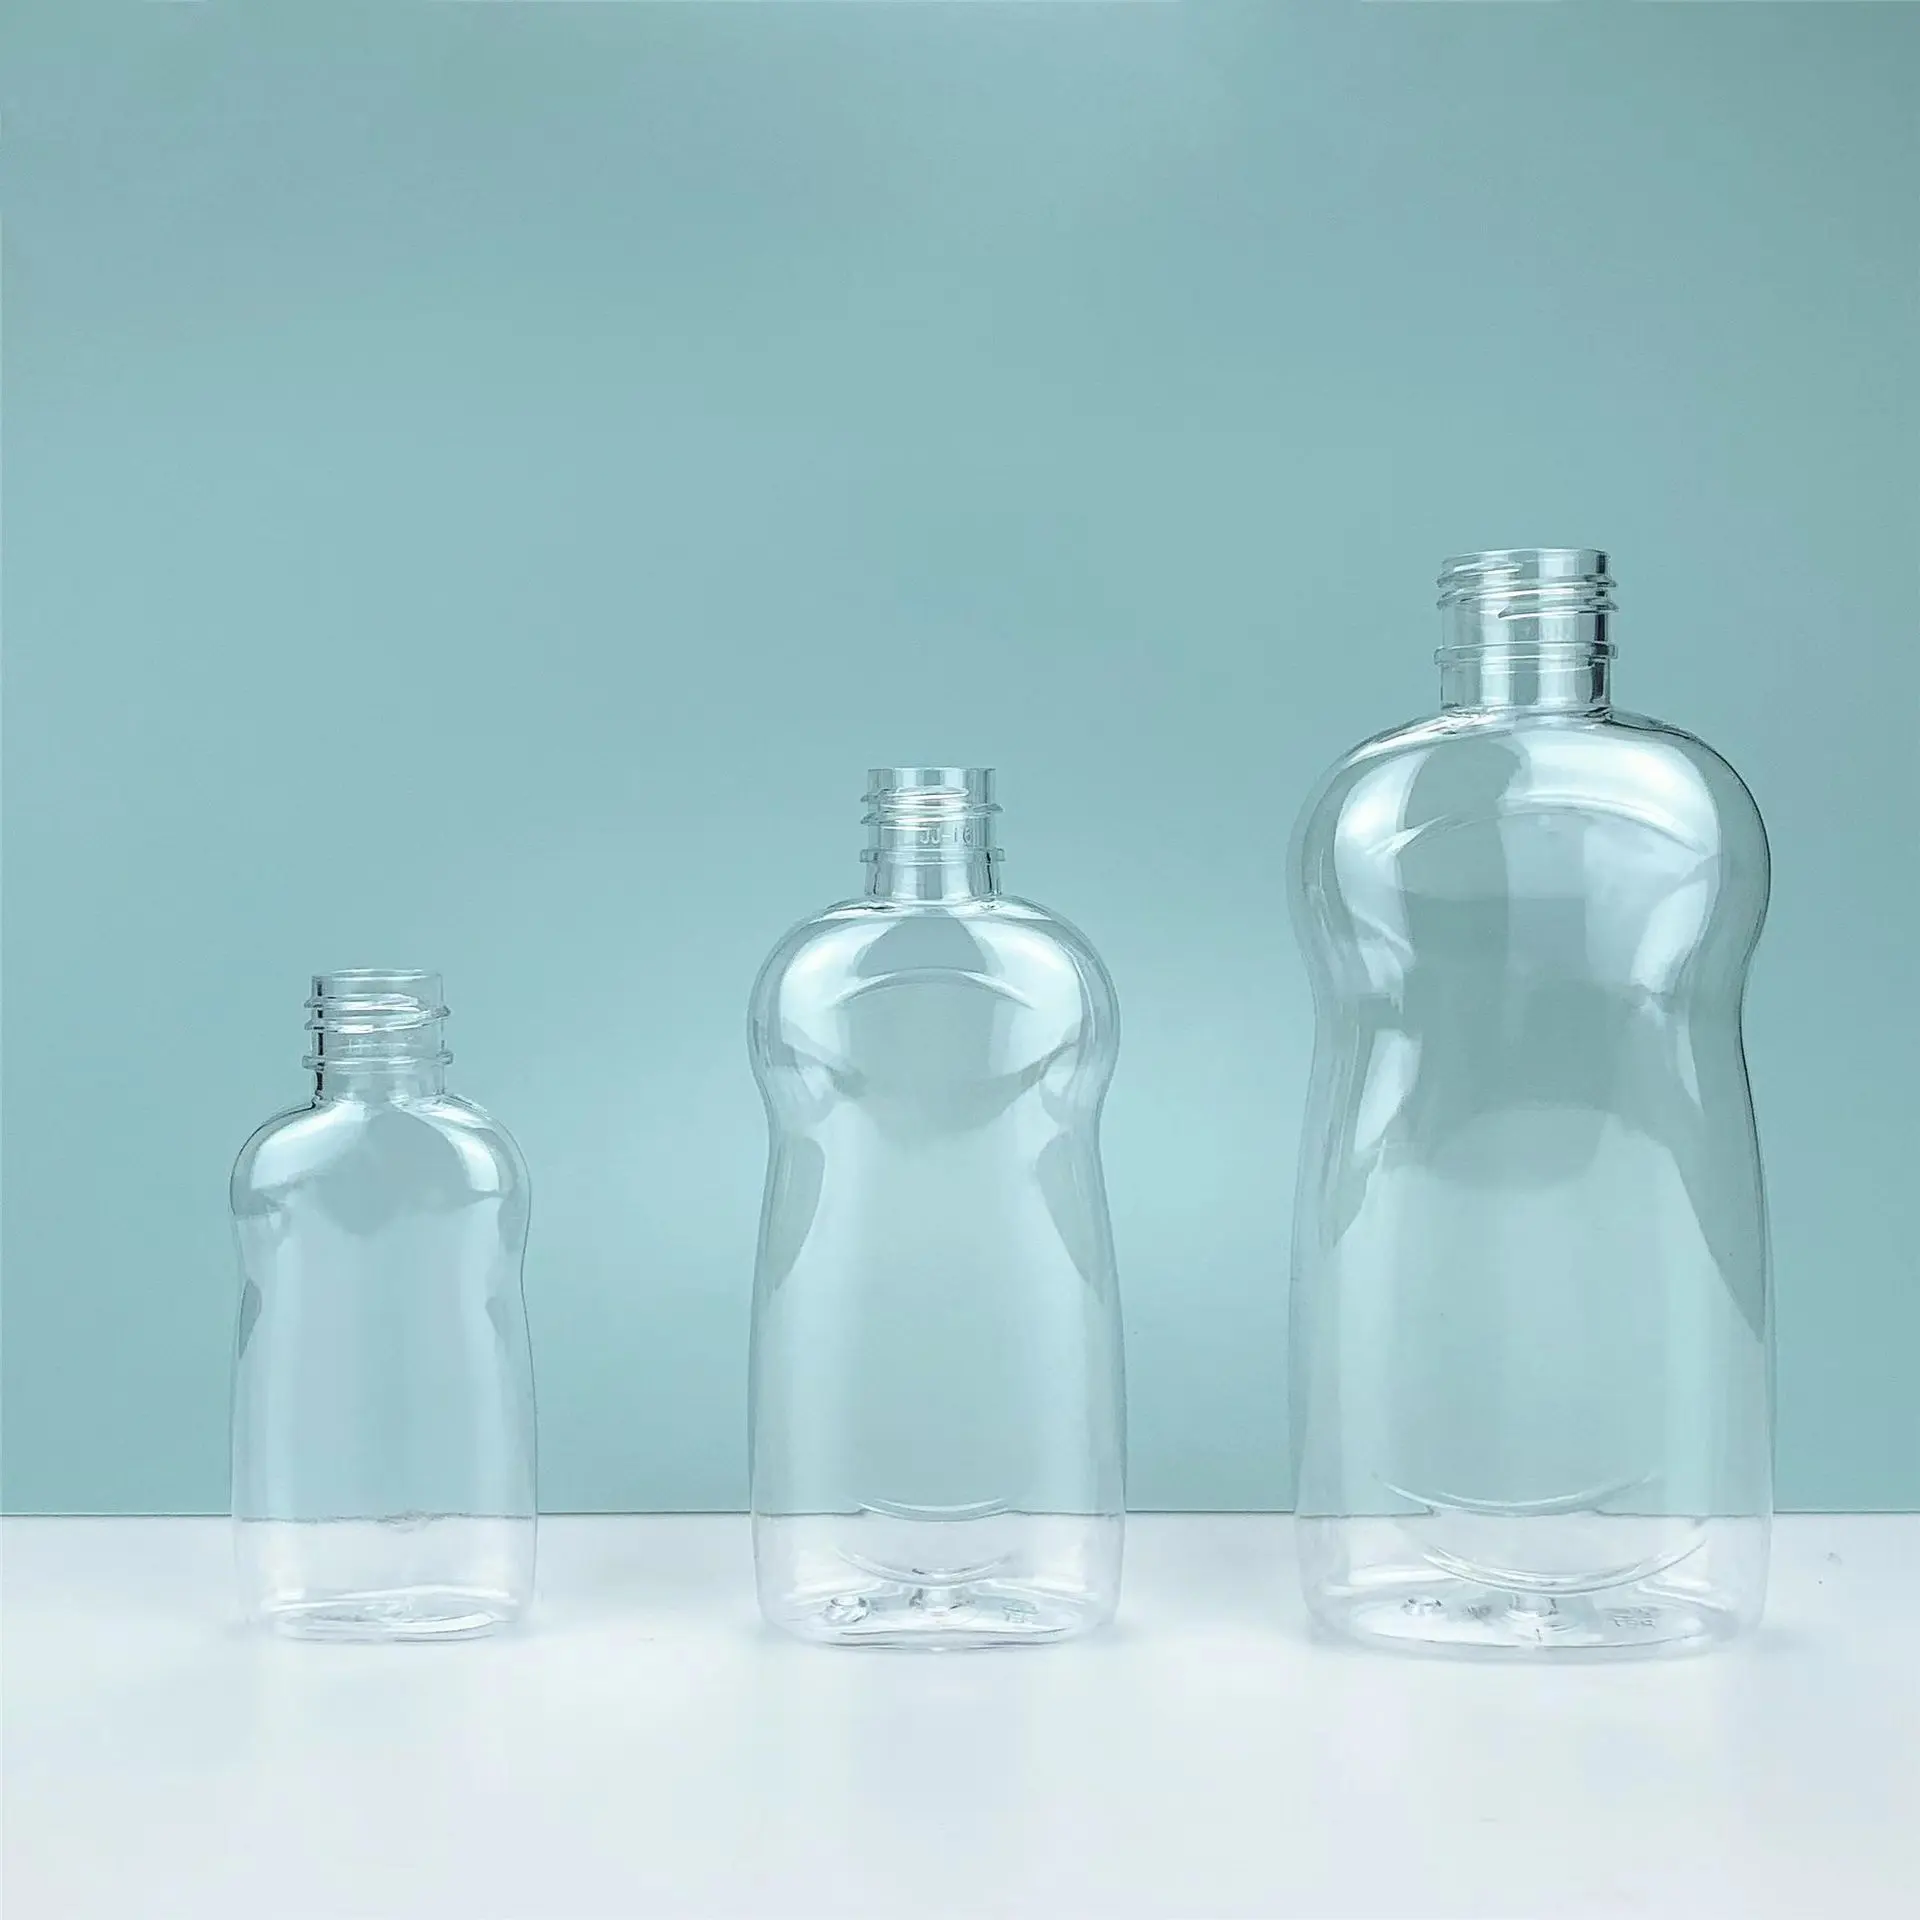 Wholesale 200ml Johnson Baby Shampoo Bottle Body Shower Gel Bottle With Lotion Pump